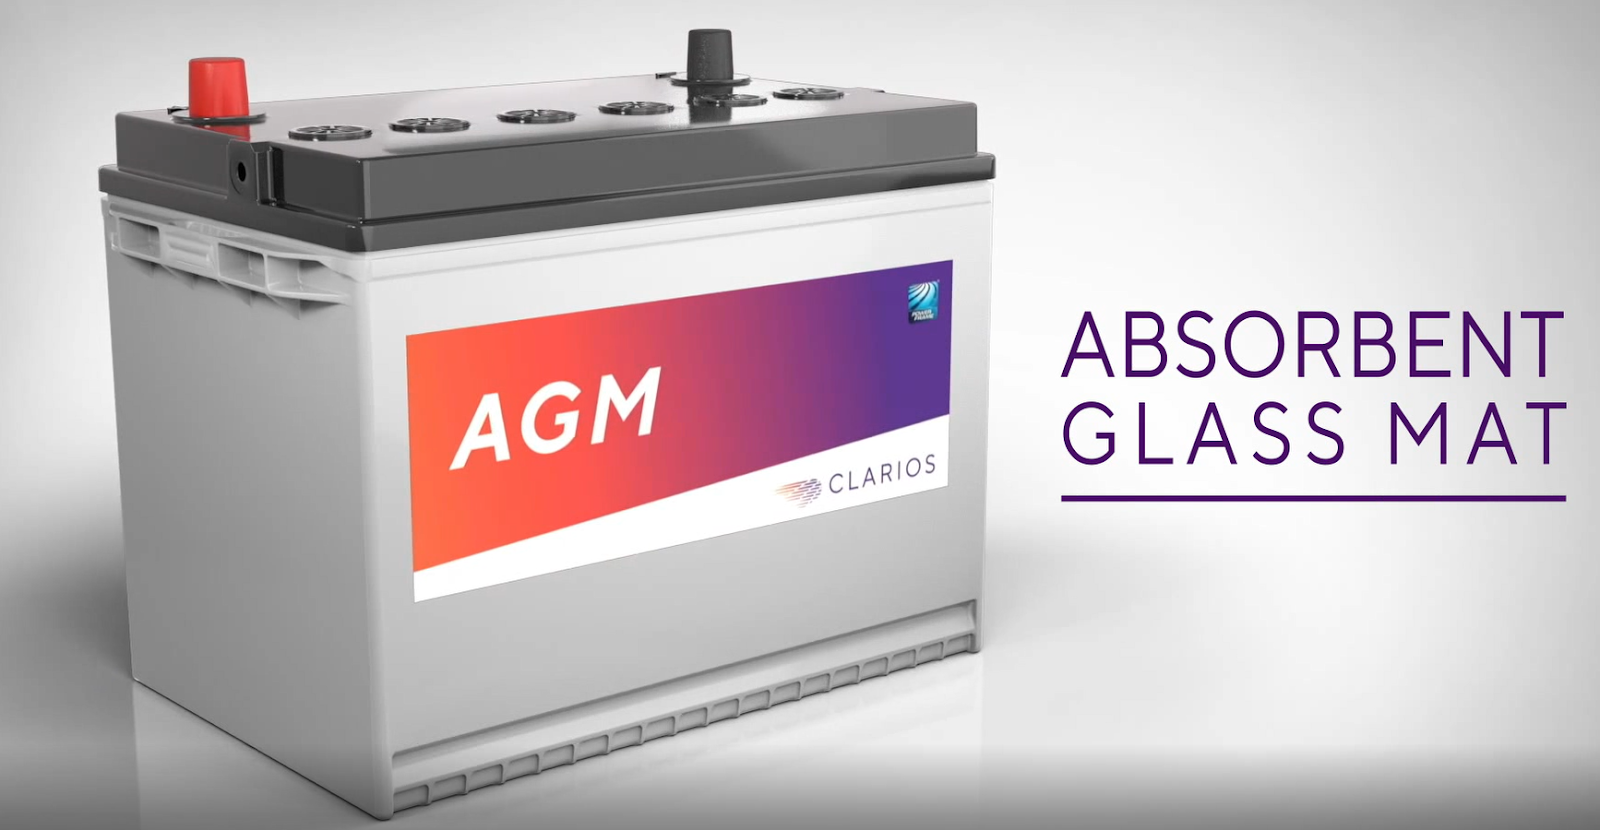 Lead-Acid vs. Absorbed Glass Mat Batteries